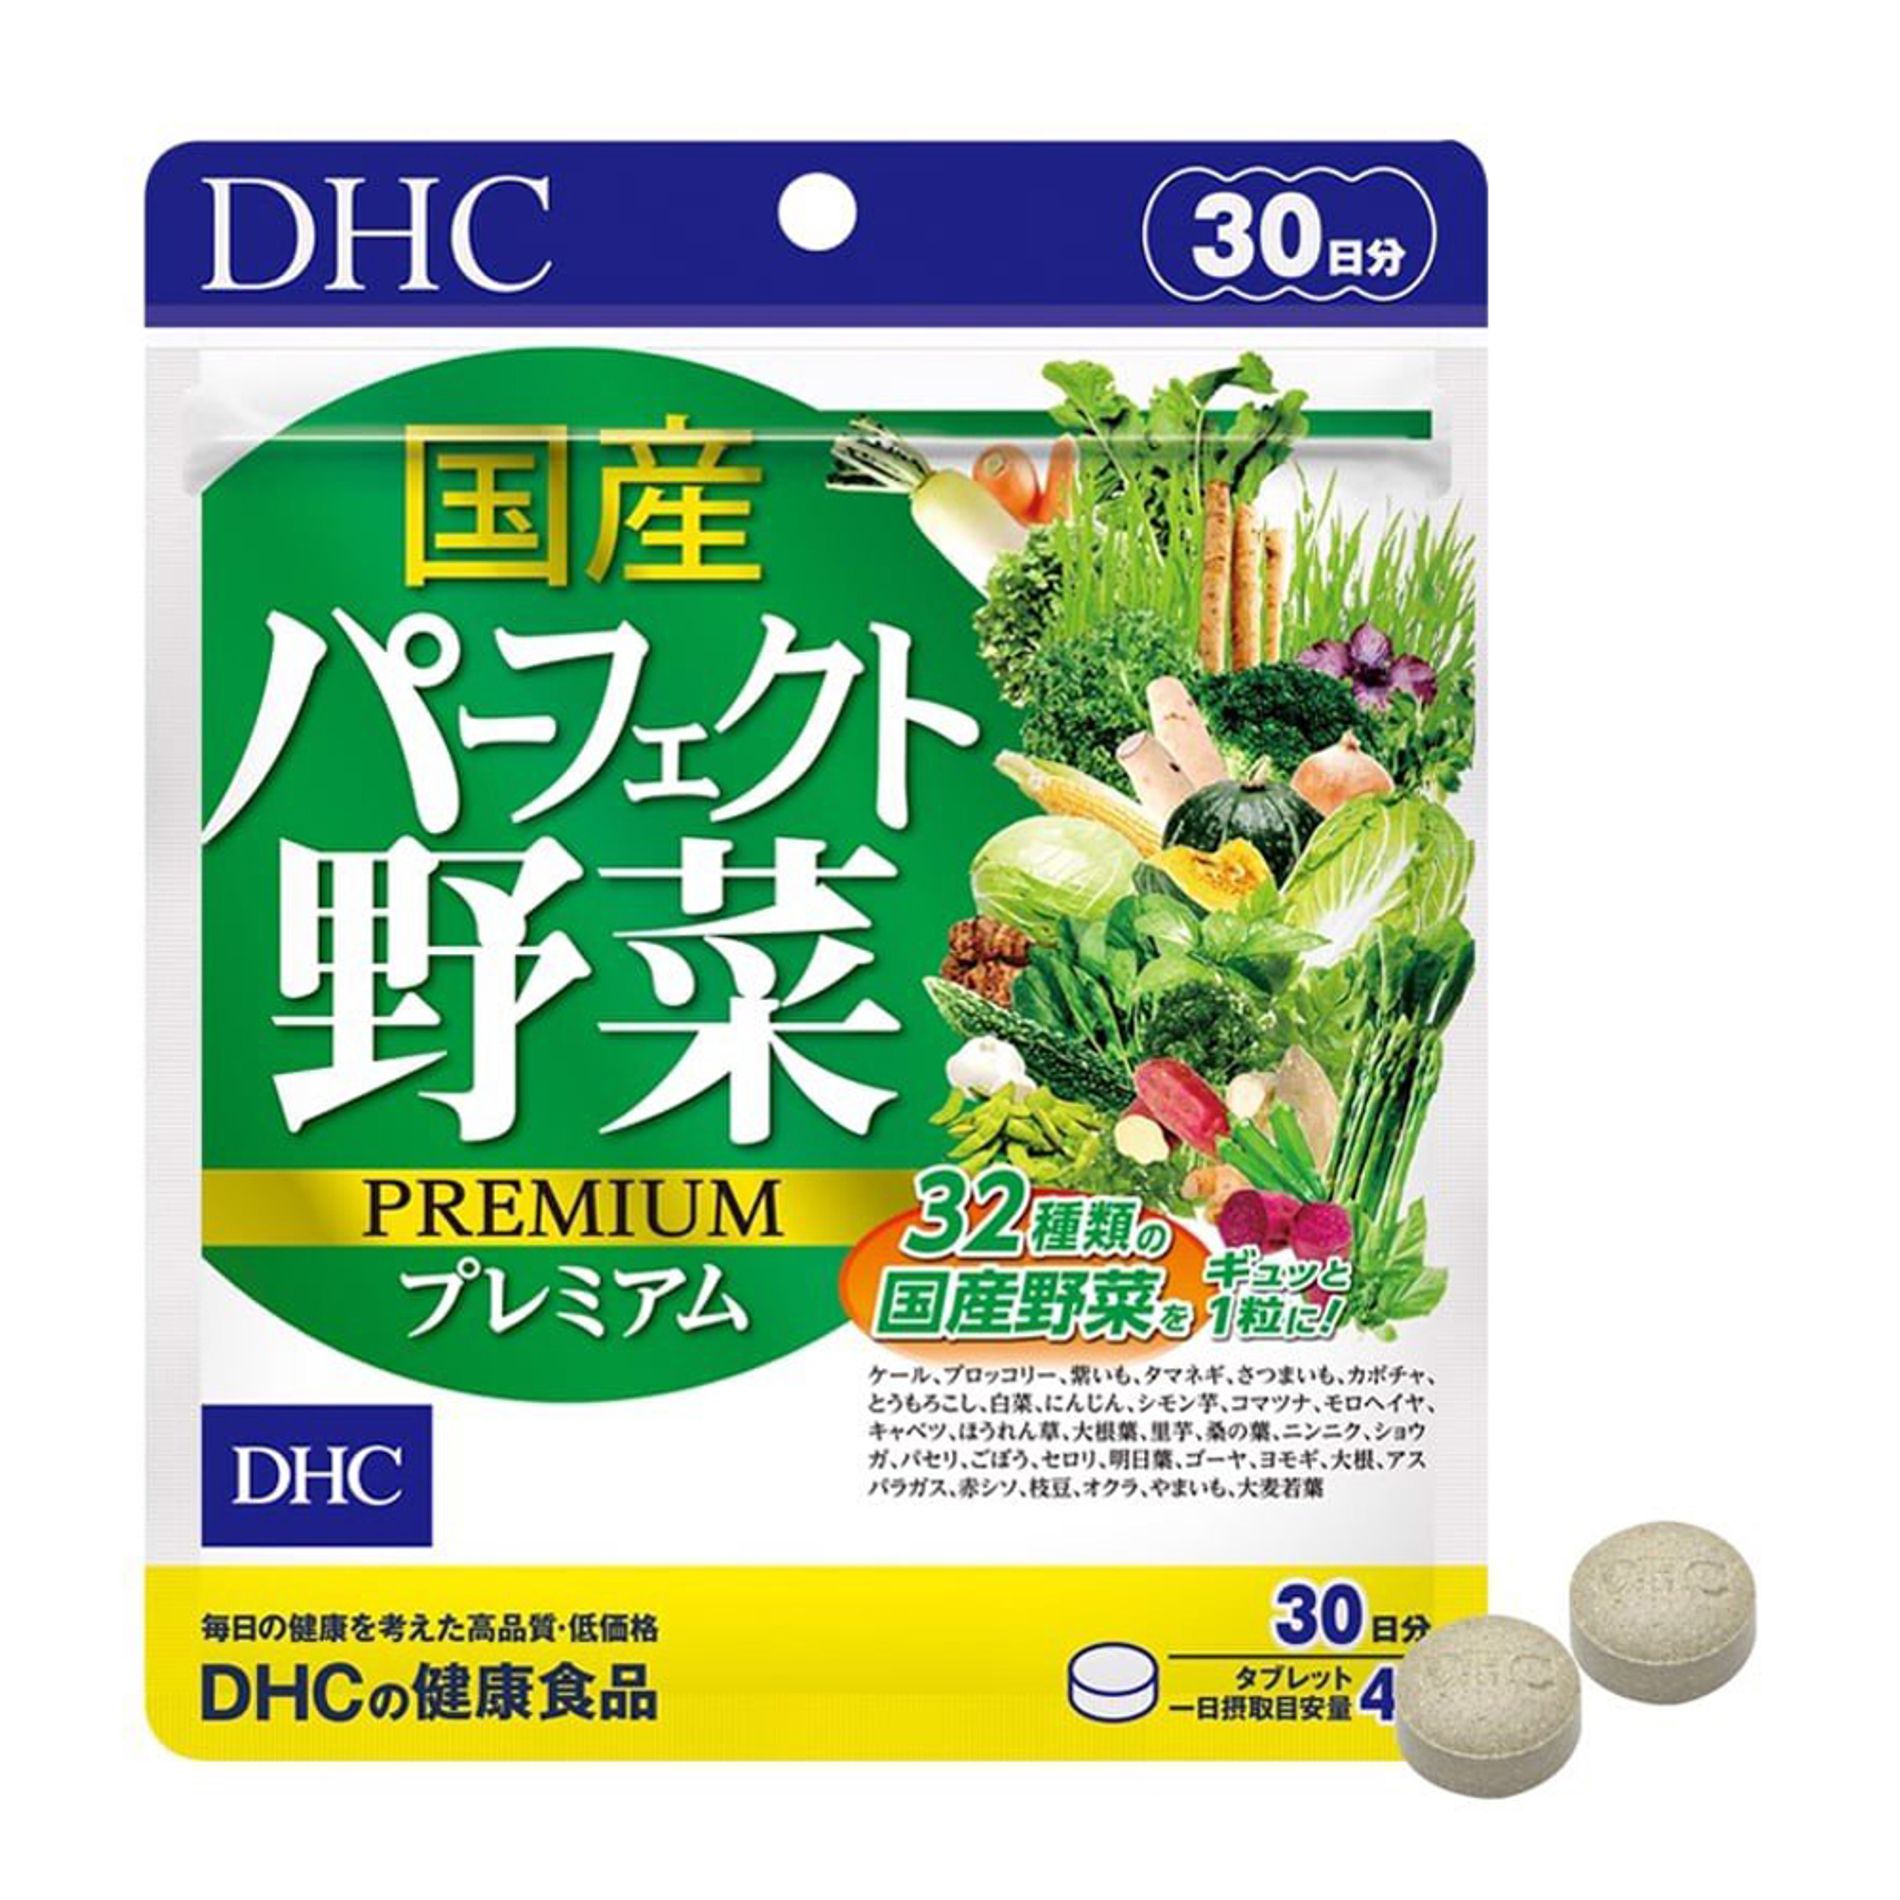 thuc-pham-bao-ve-suc-khoe-dhc-perfect-vegetable-premium-japanese-harvest-6